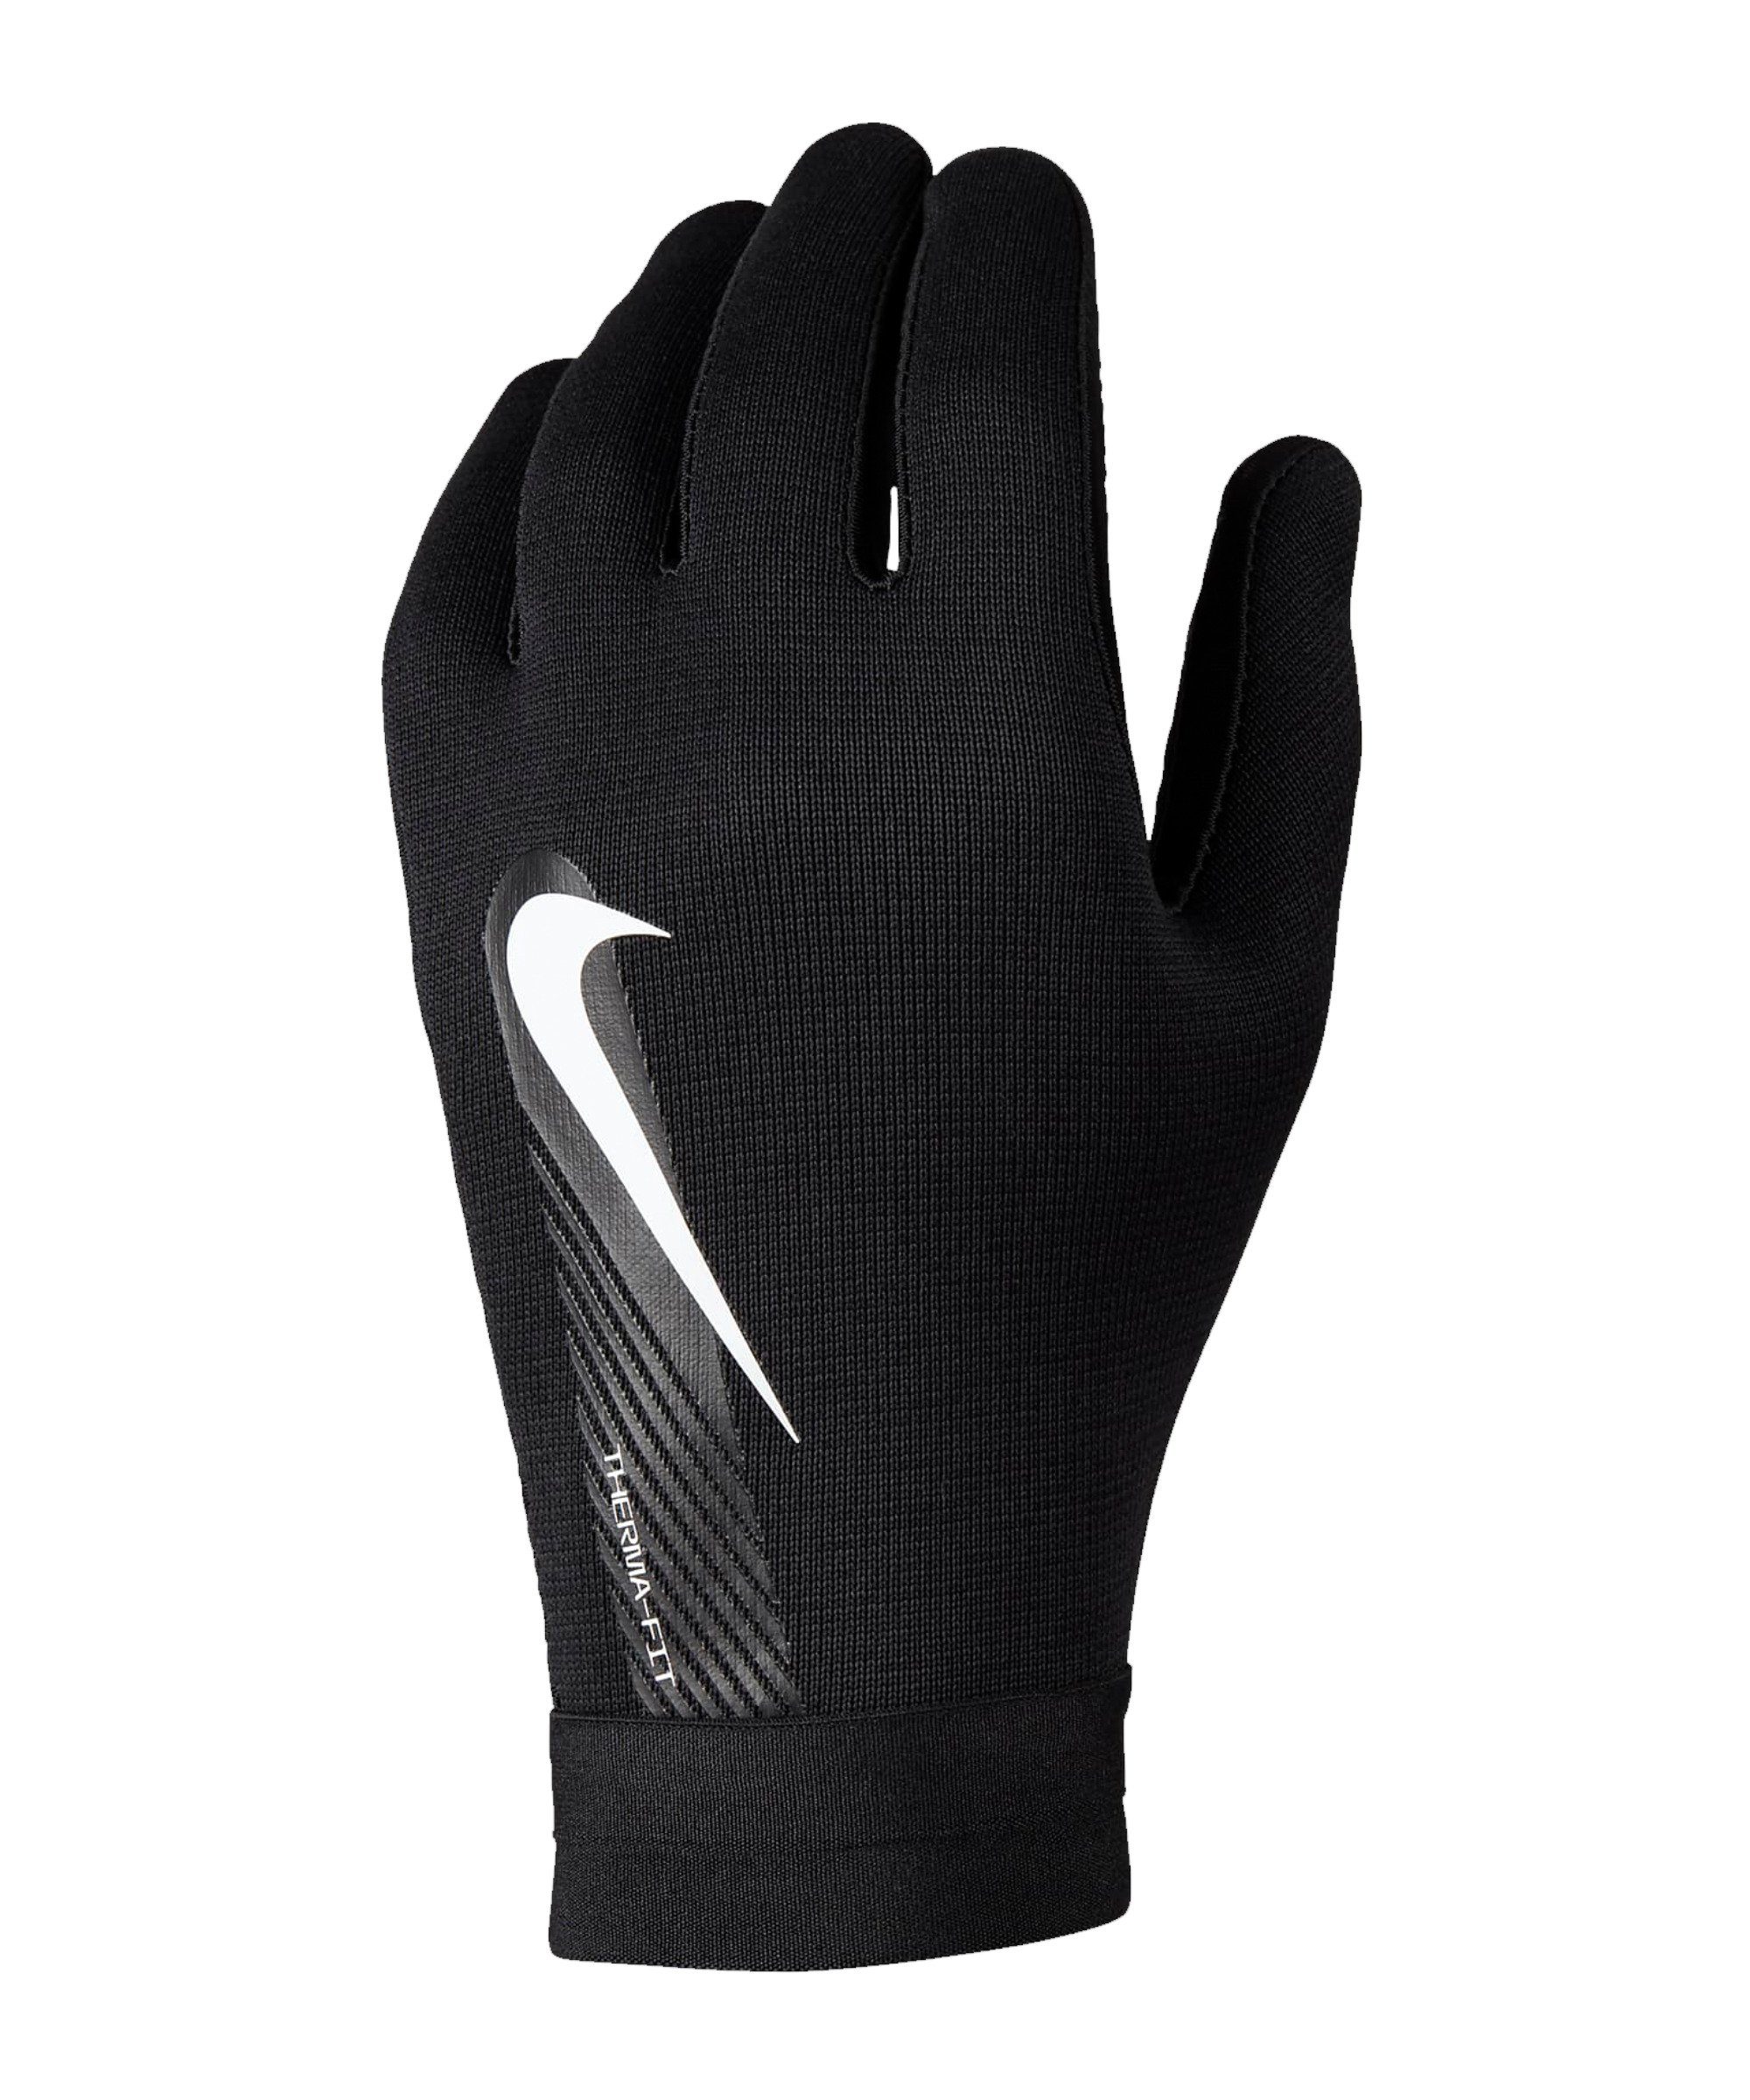 Nike Feldspielerhandschuhe Academy schwarzschwarzweiss Spielerhandschuh Therma-FIT